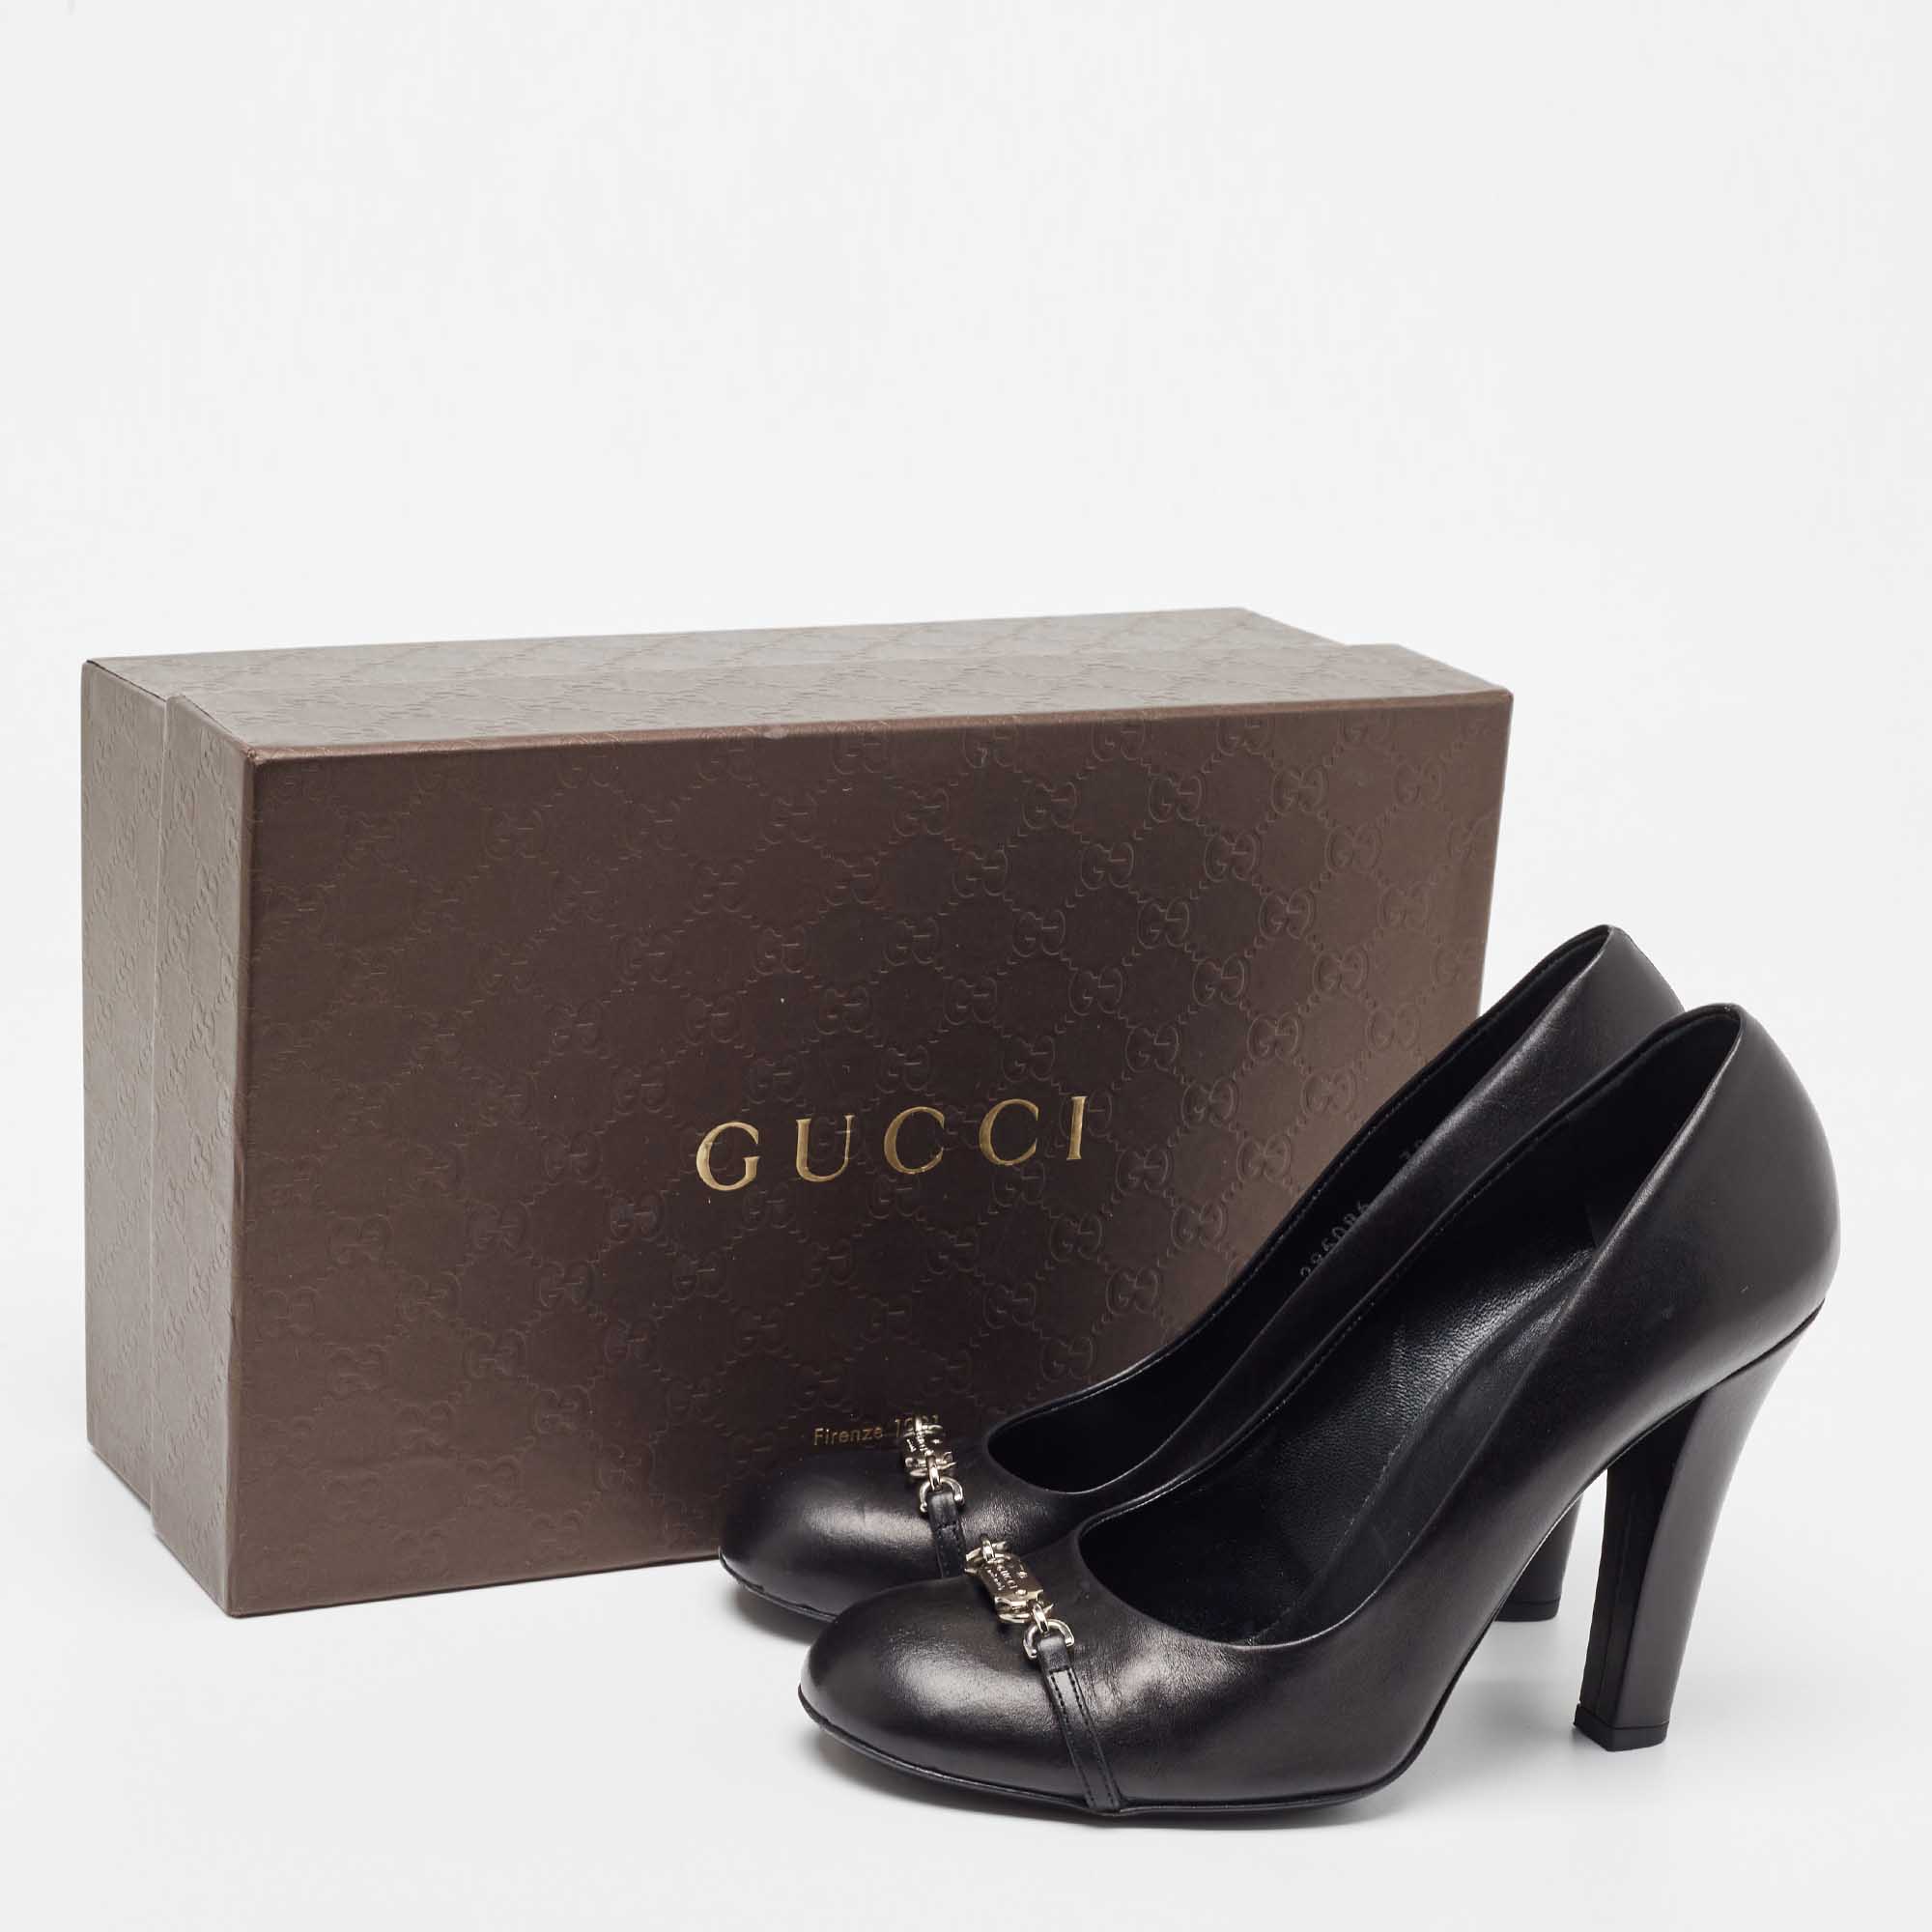 Gucci Black Leather Round Toe Pumps Size 39